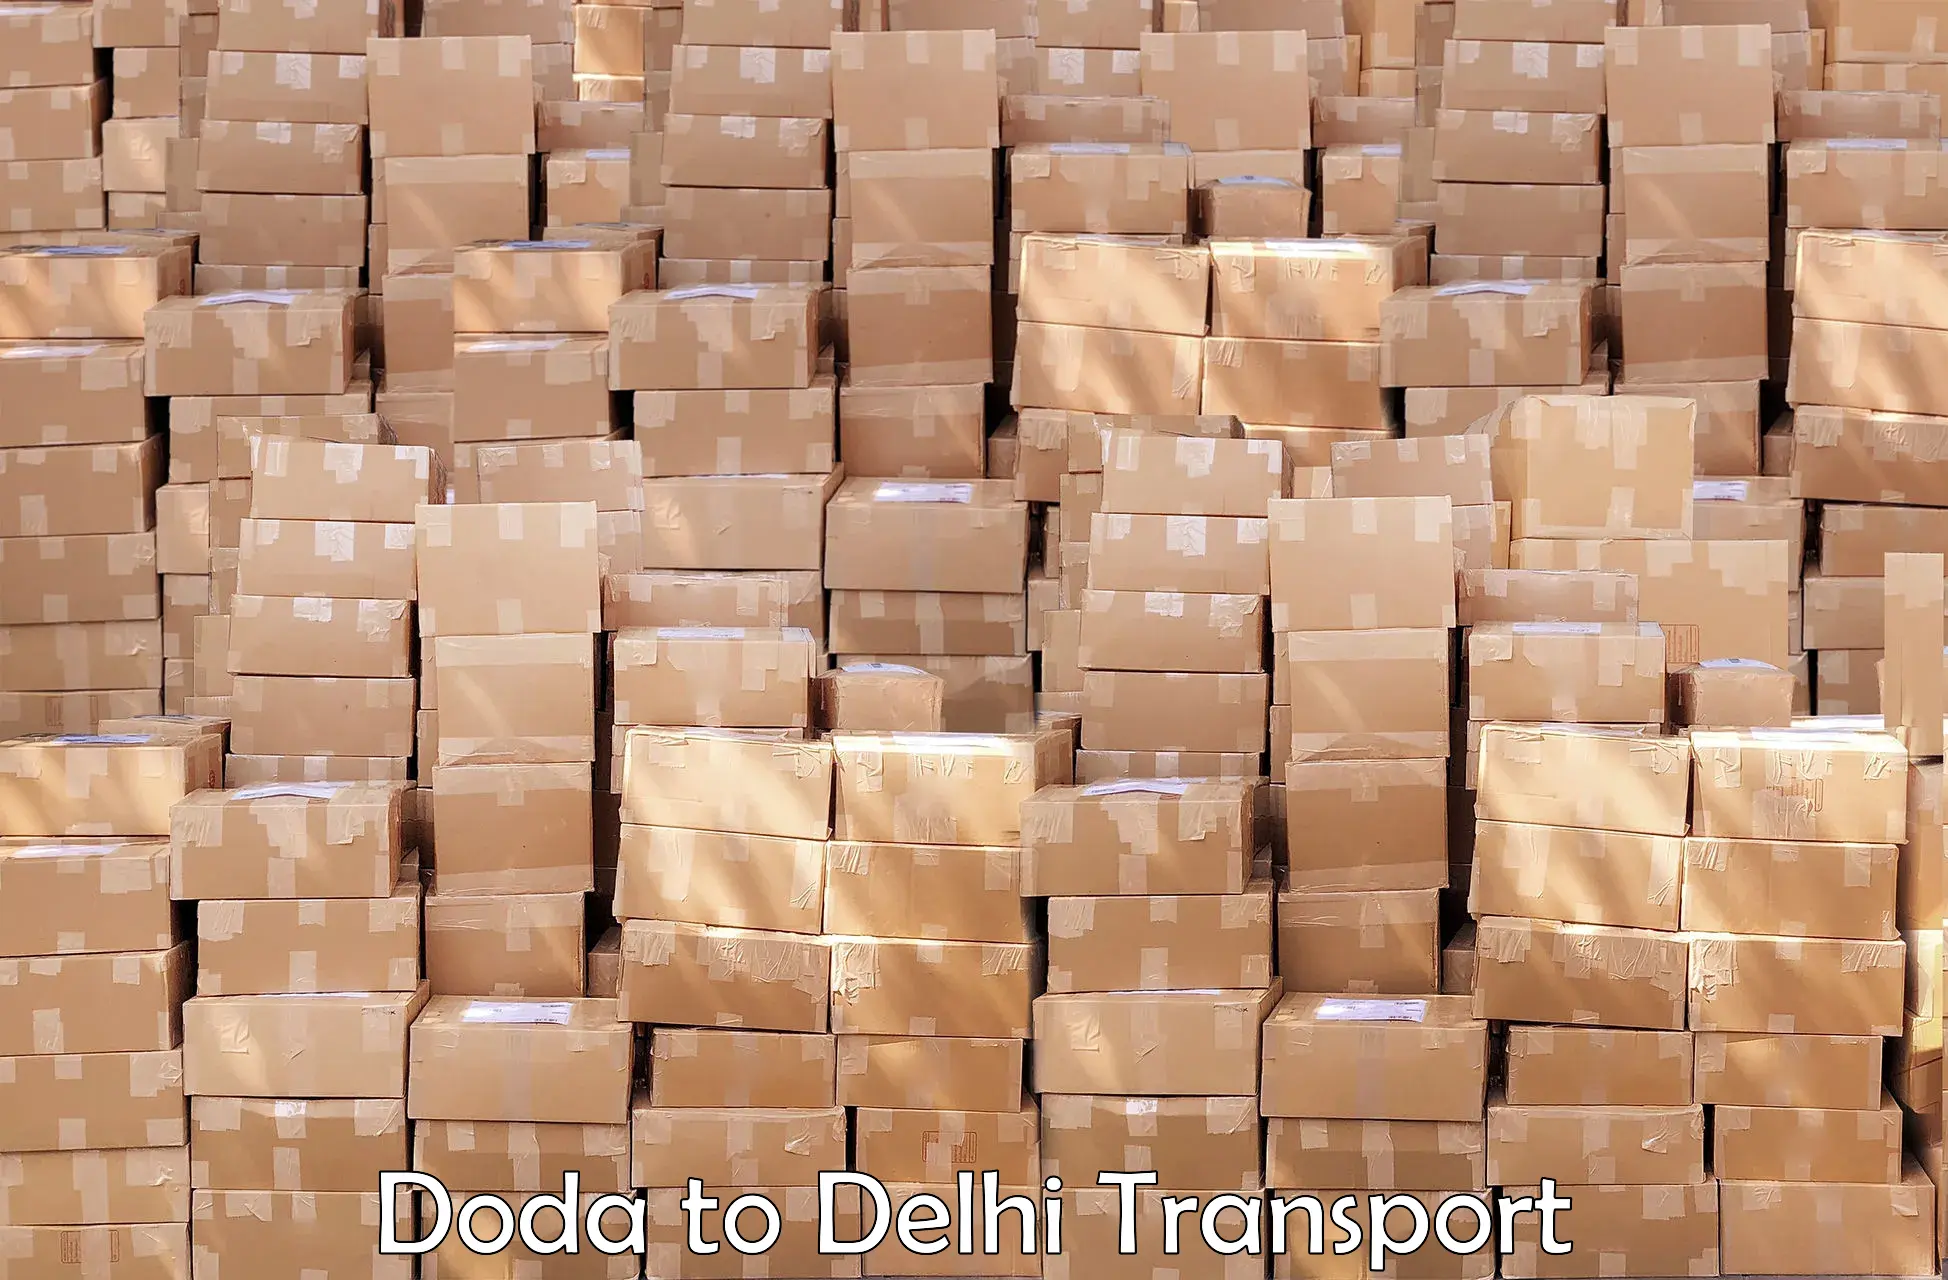 Sending bike to another city Doda to Delhi